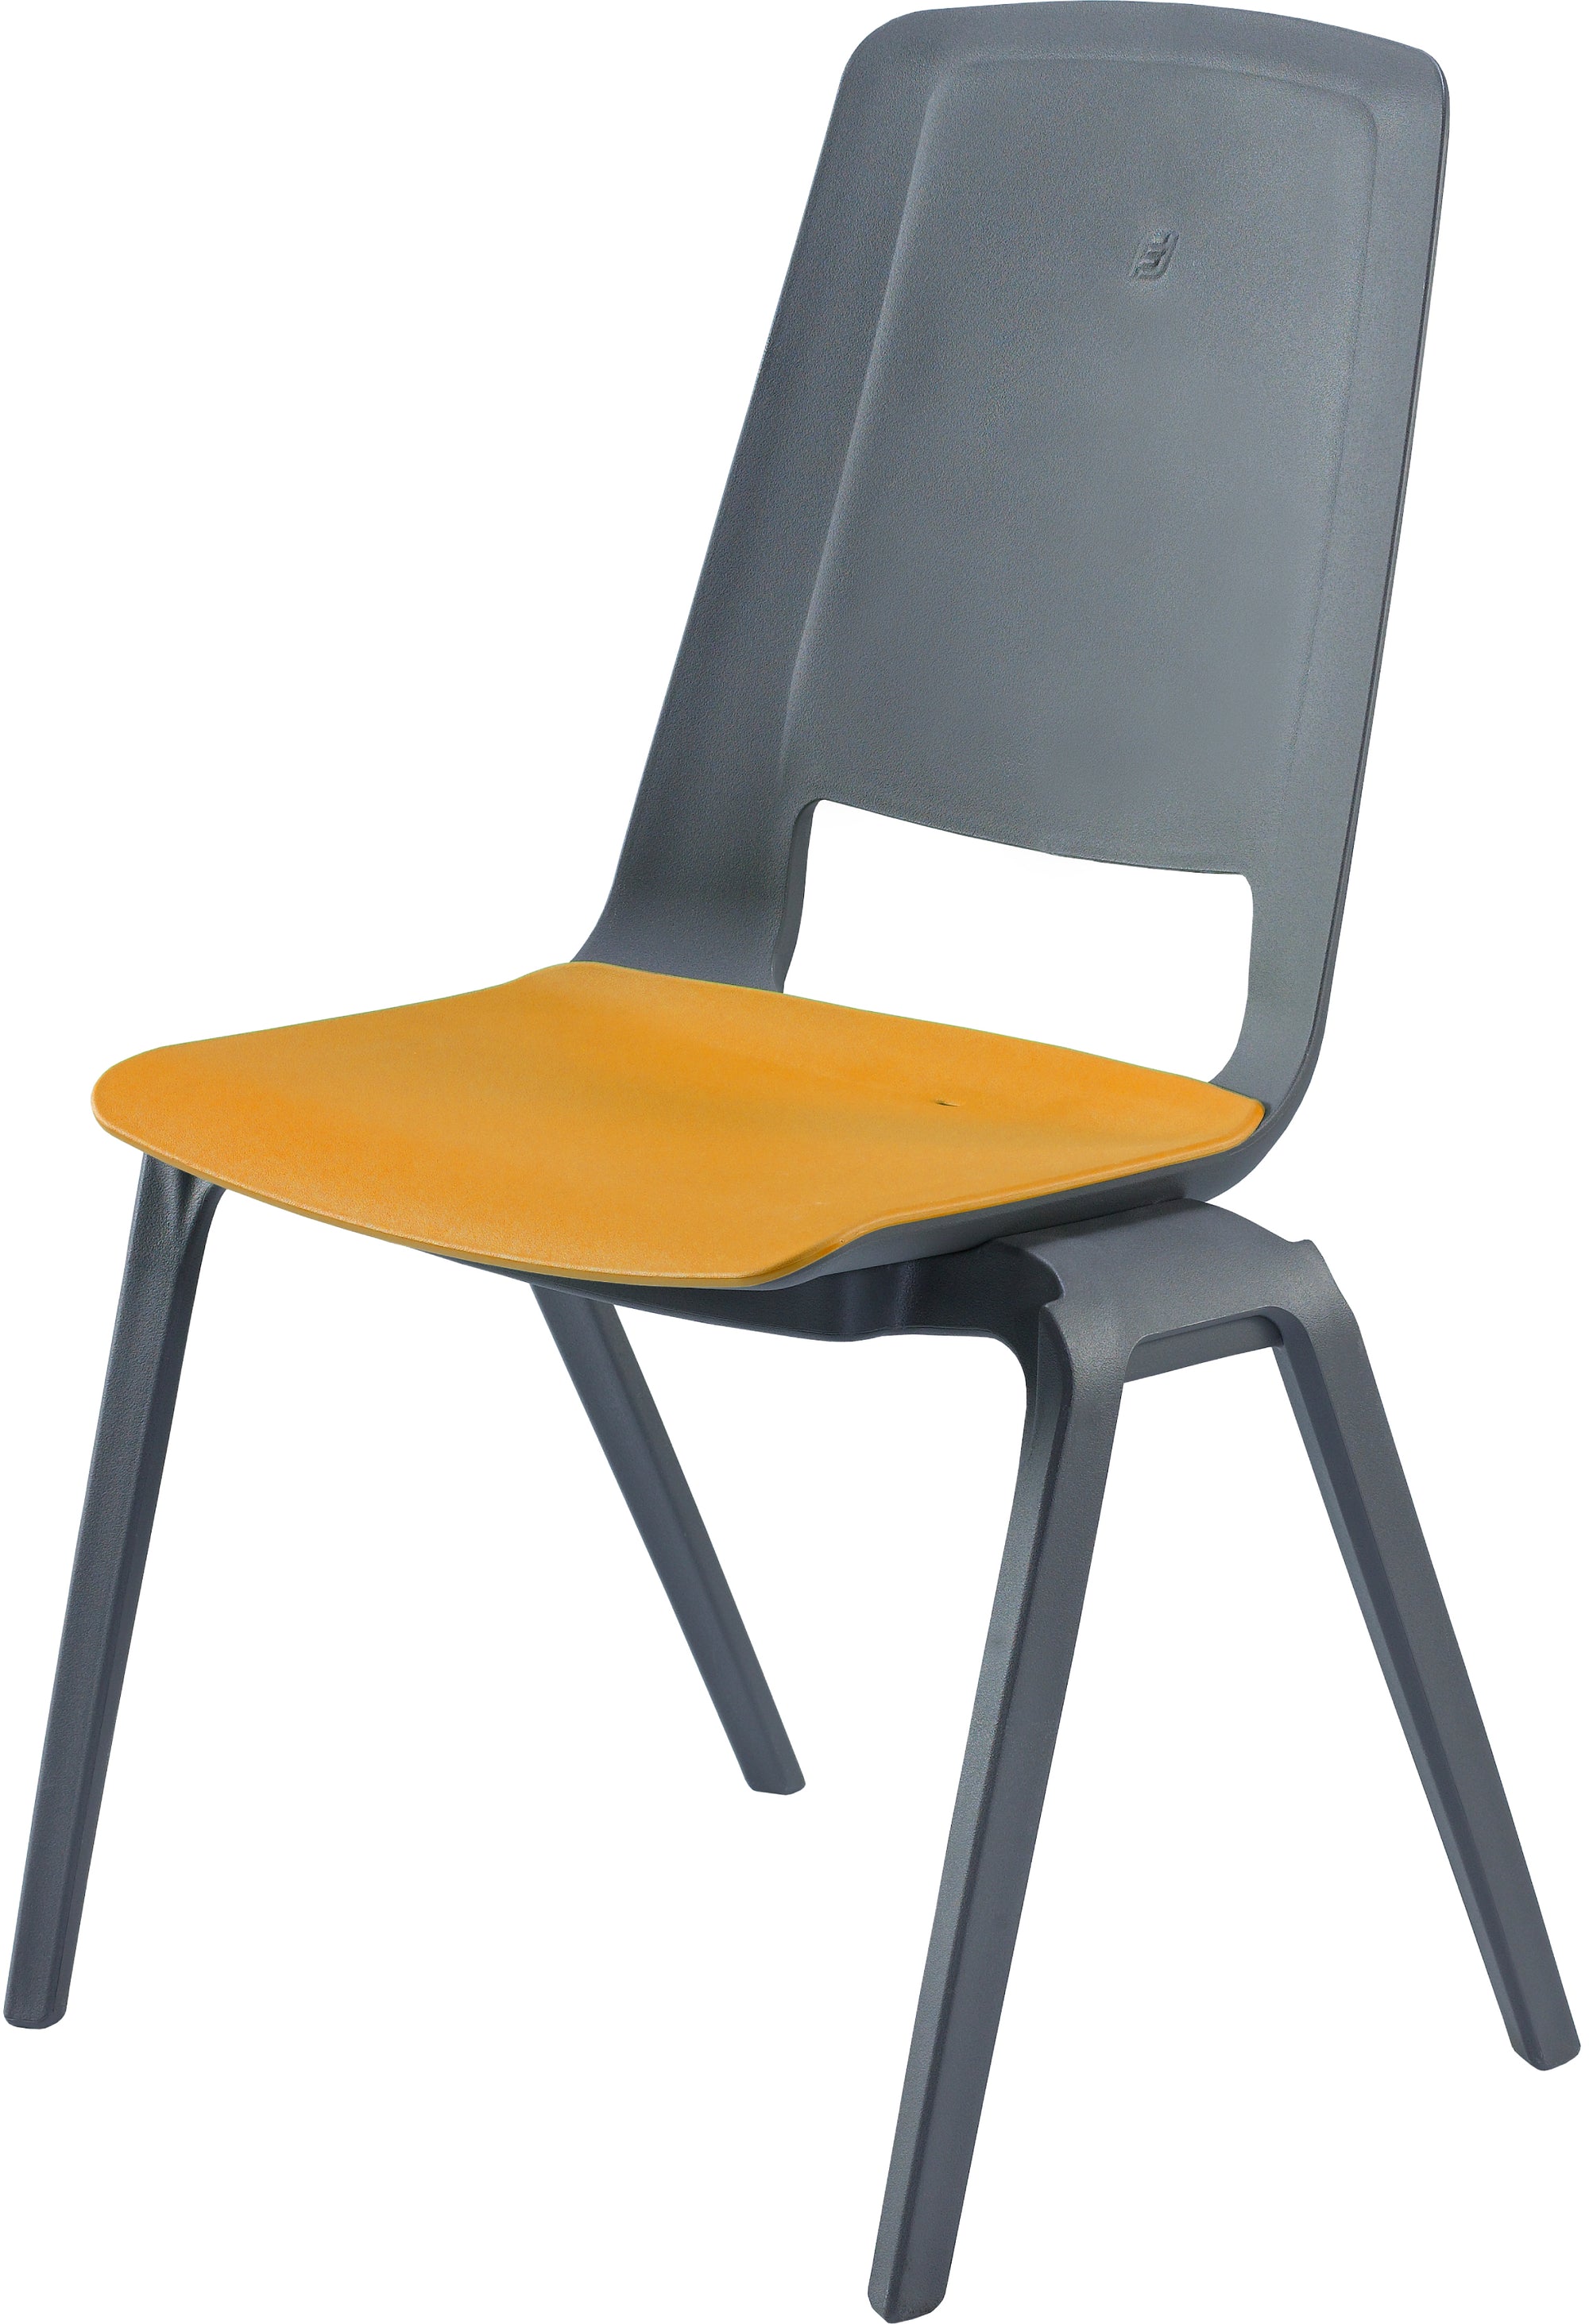 Aversa Linking Chair PP Seat